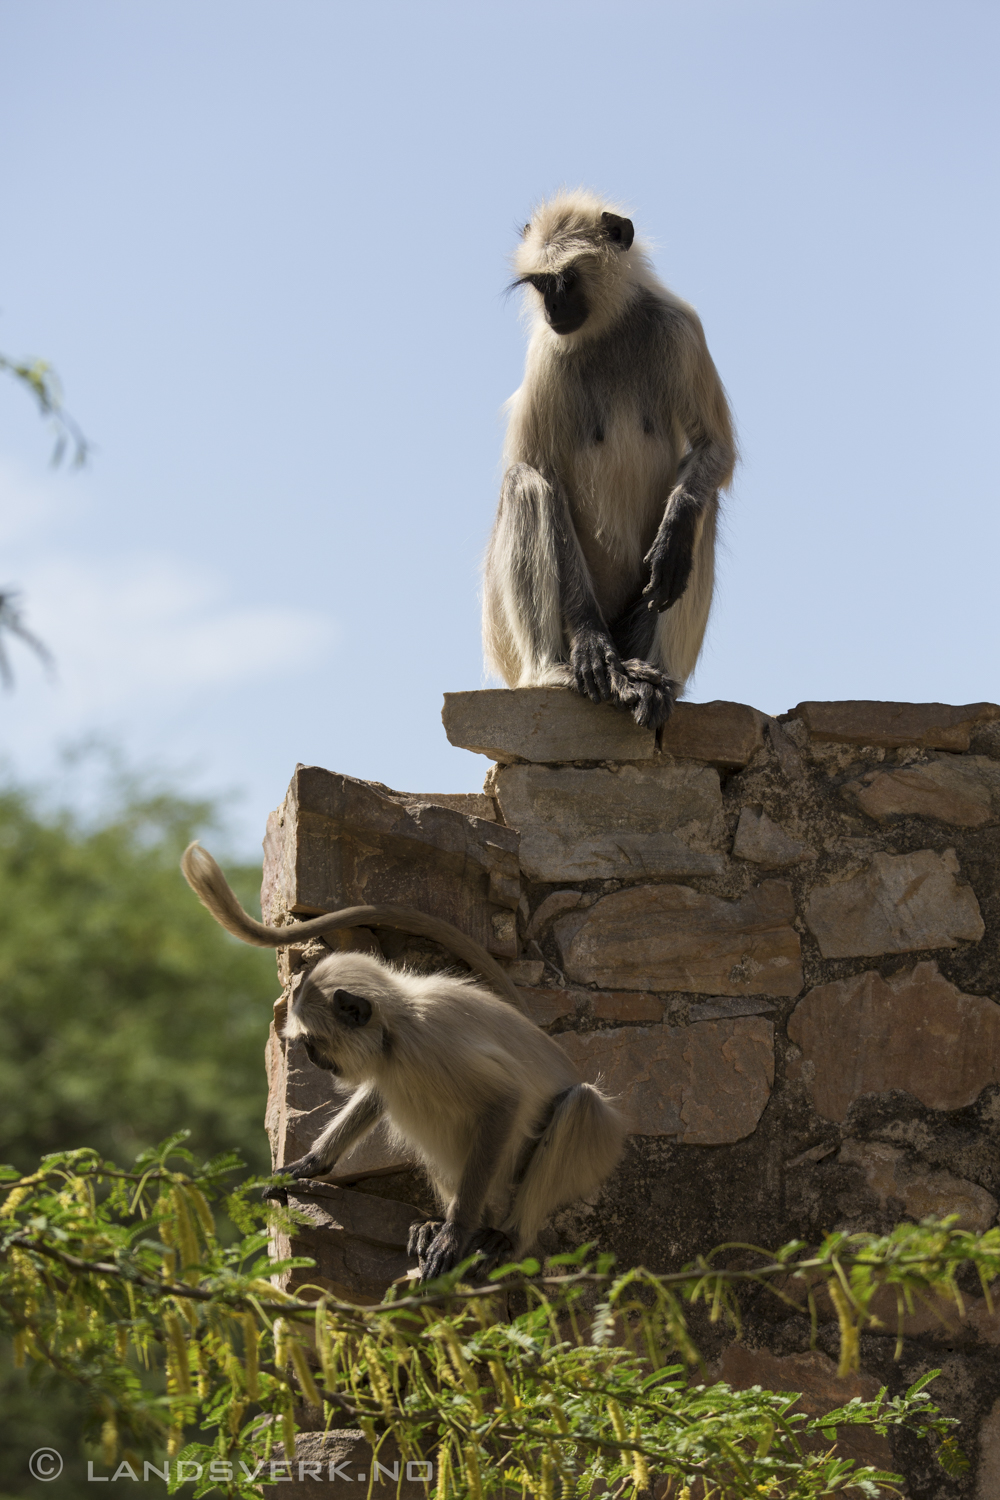 Wild hanuman monkey. Jaipur, India. 

(Canon EOS 5D Mark III / Canon EF 70-200mm f/2.8 L IS II USM / Canon 2x EF Extender III)